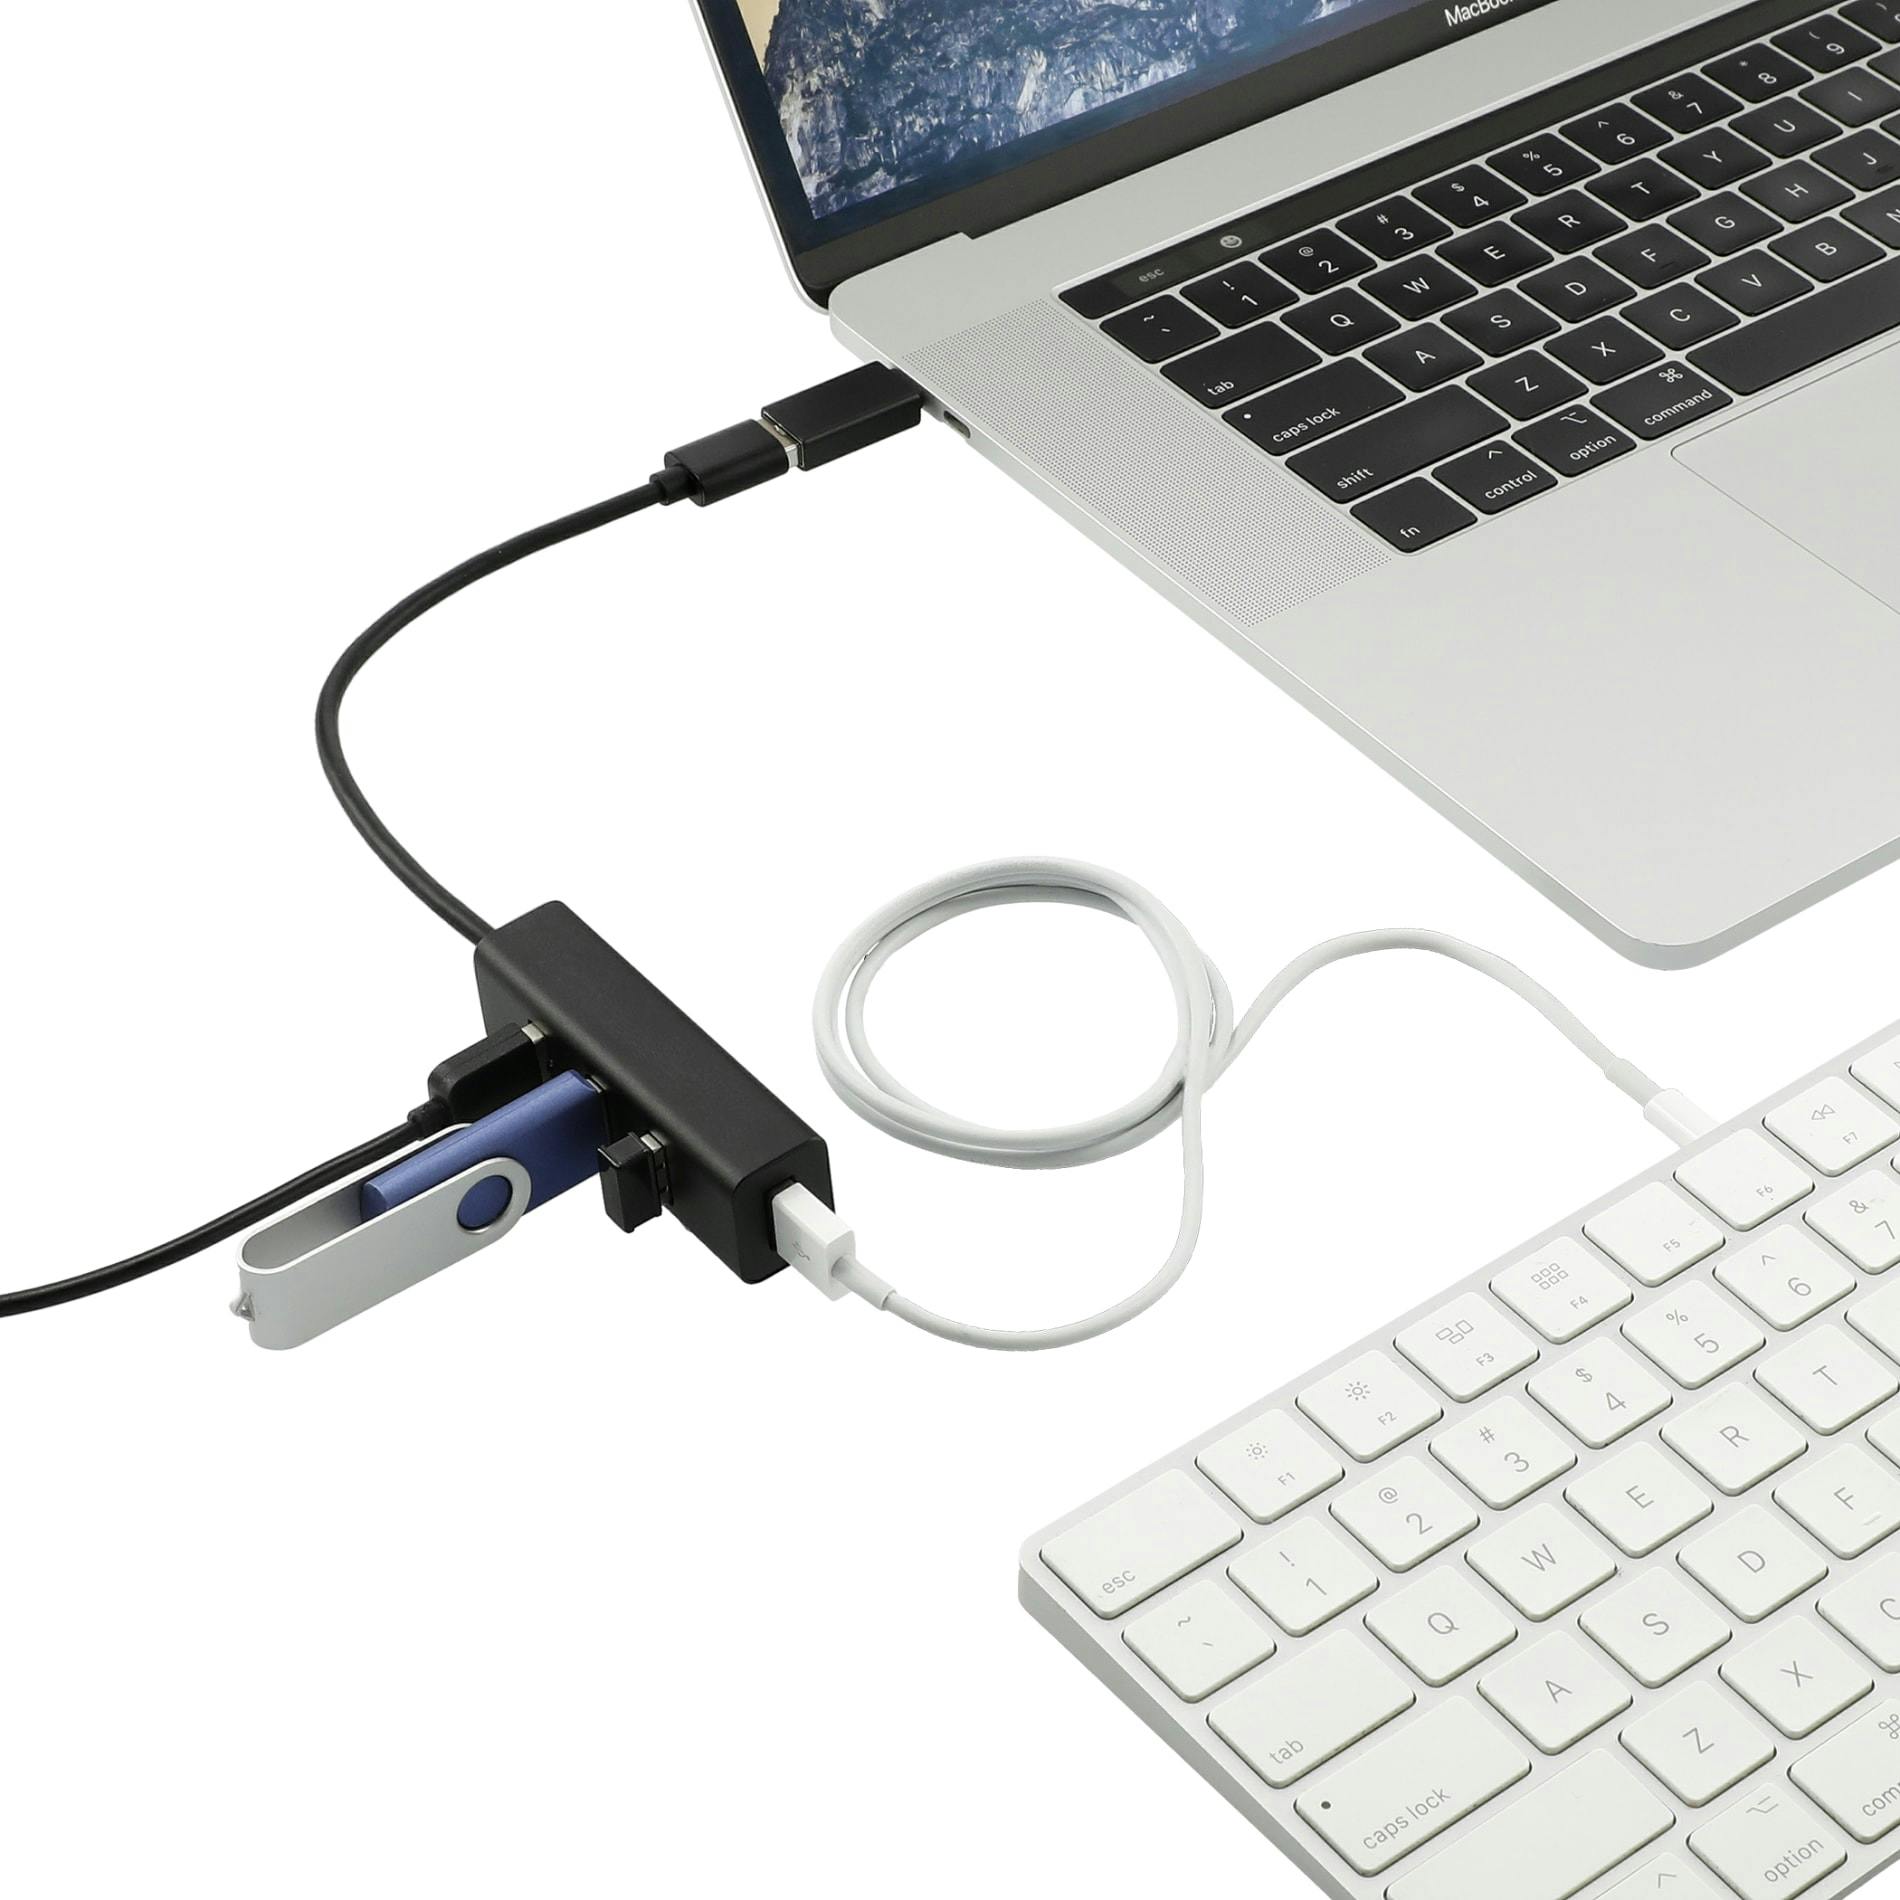 Aluminum 4-Port USB 3.0 Hub with Type C Adapter - additional Image 1